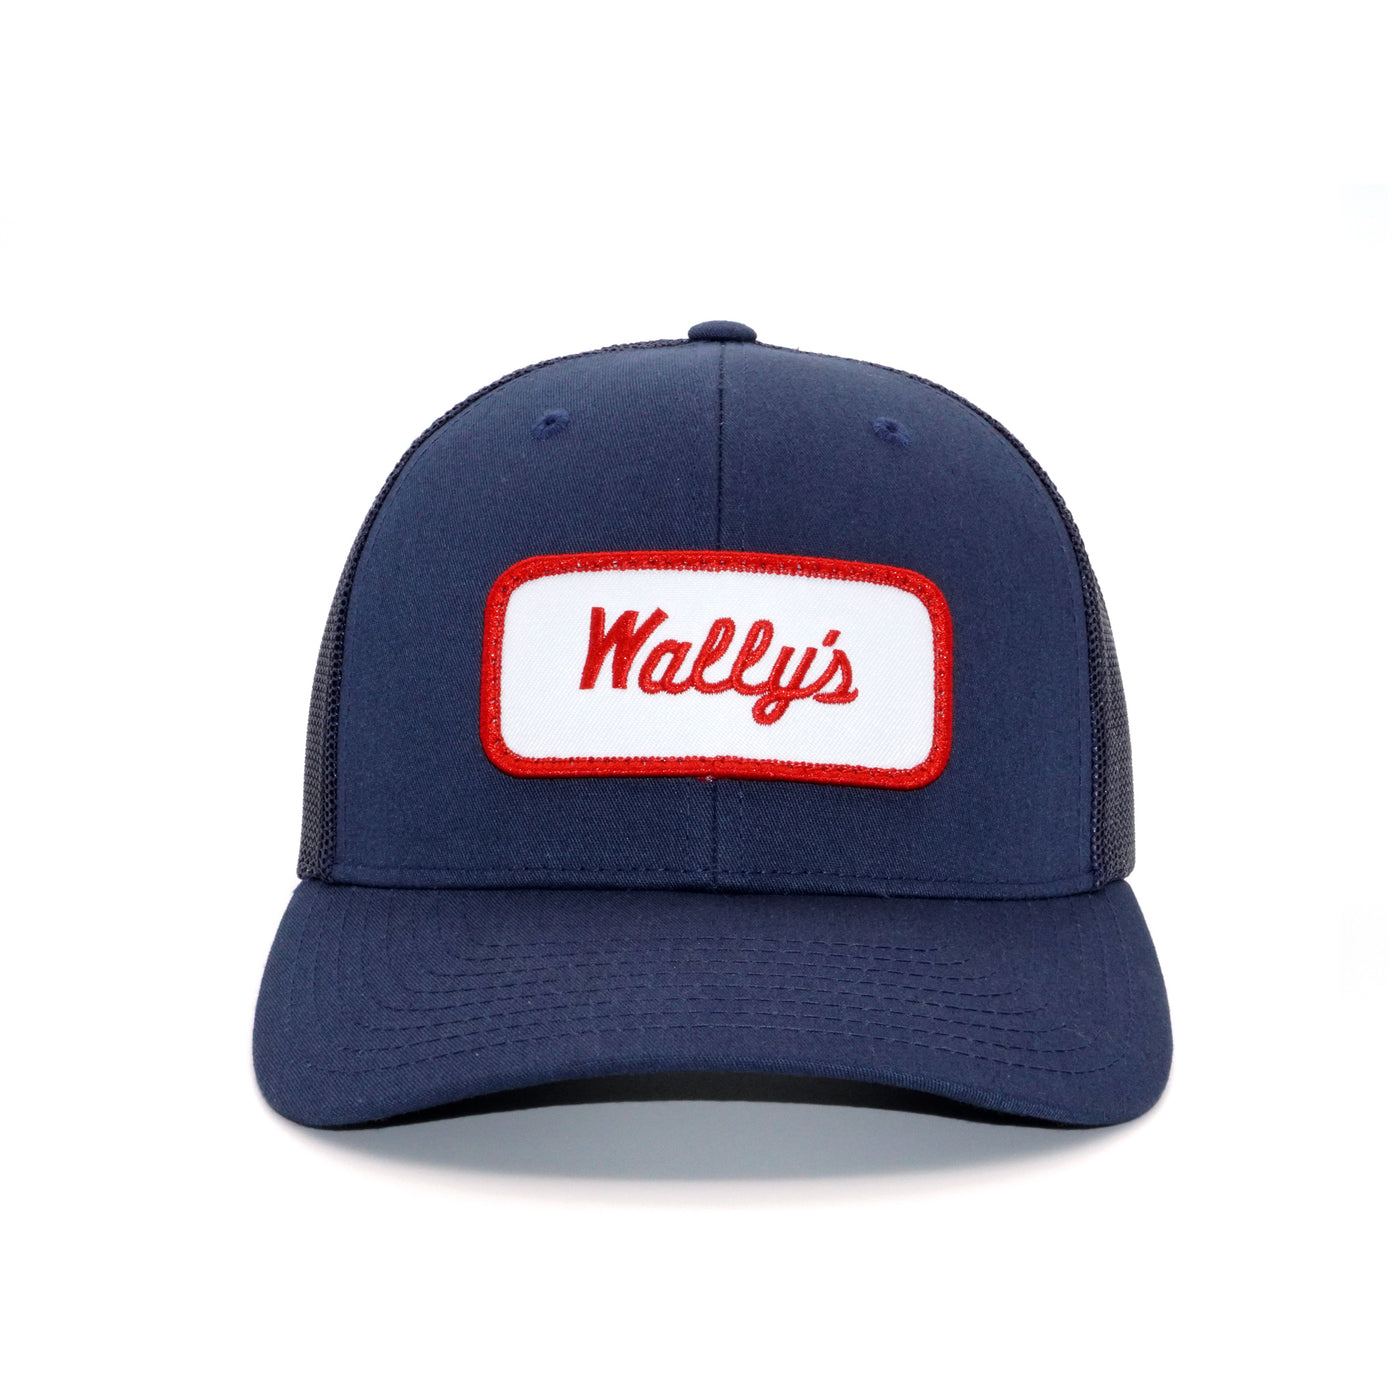 Wally's Mechanic Navy Trucker Hat